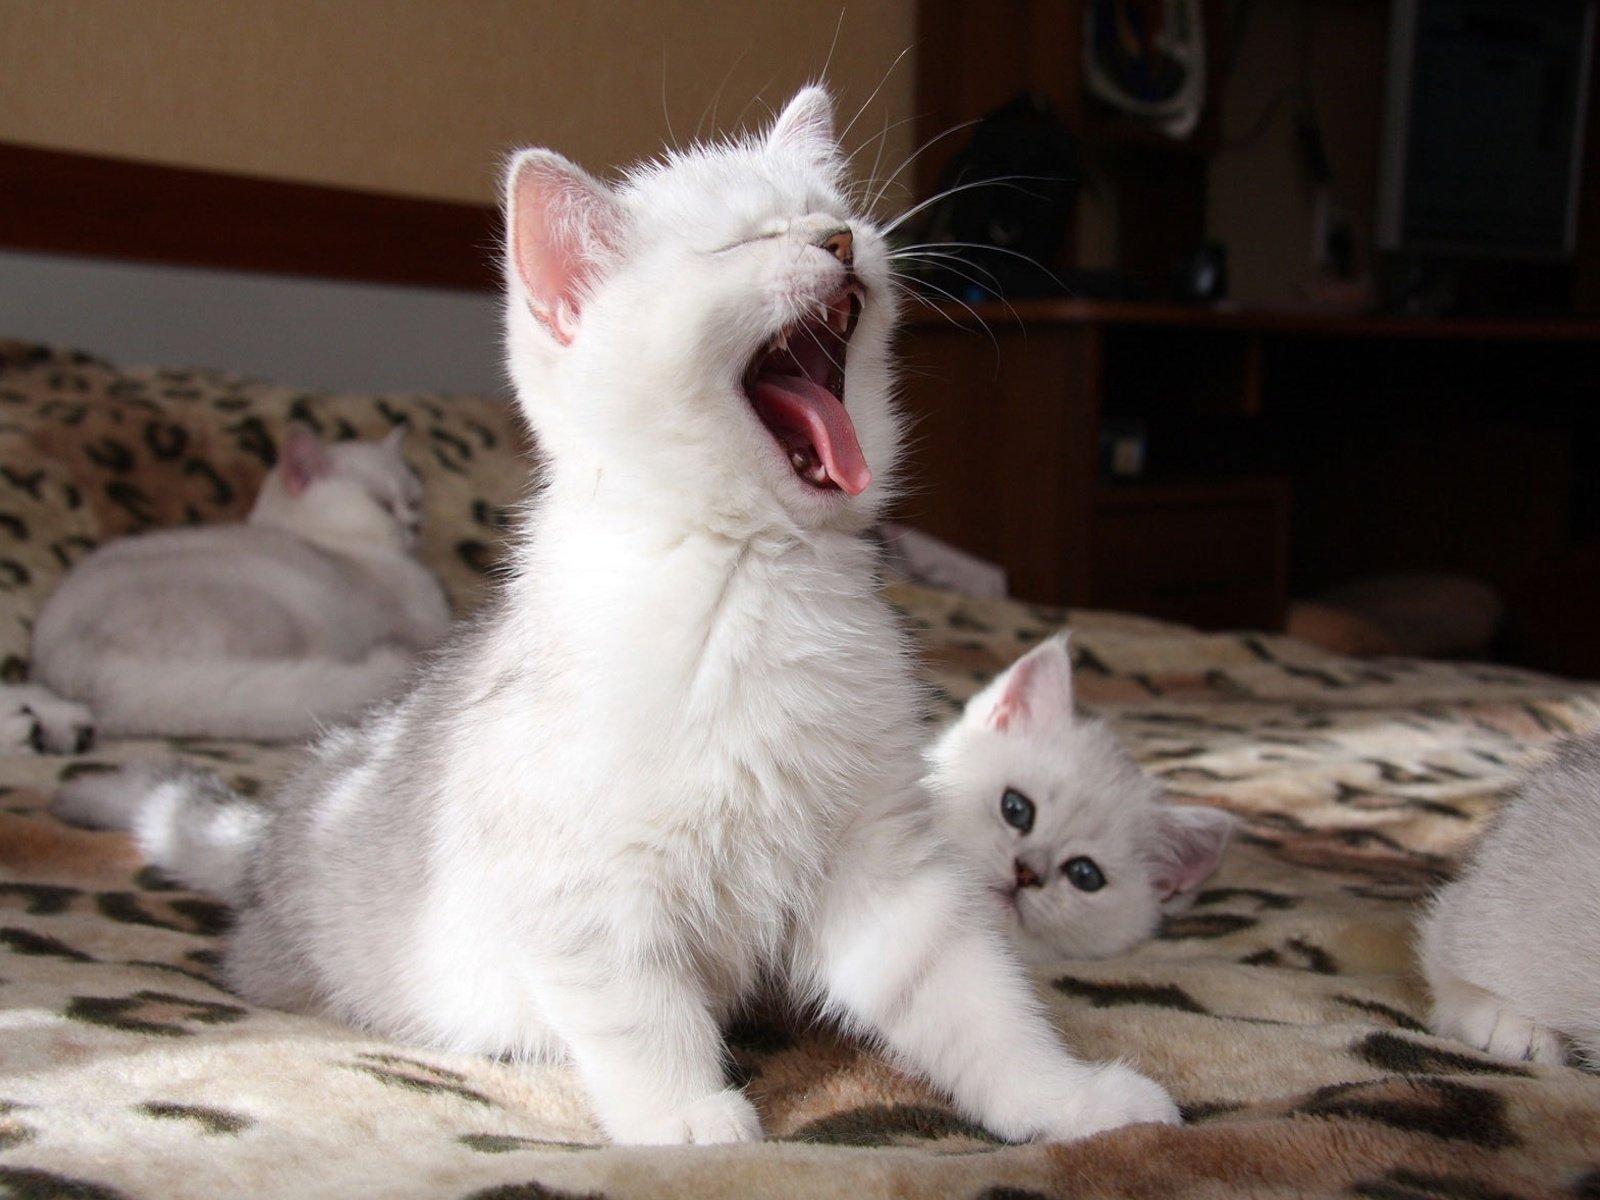 A white fluffy kitten yawns